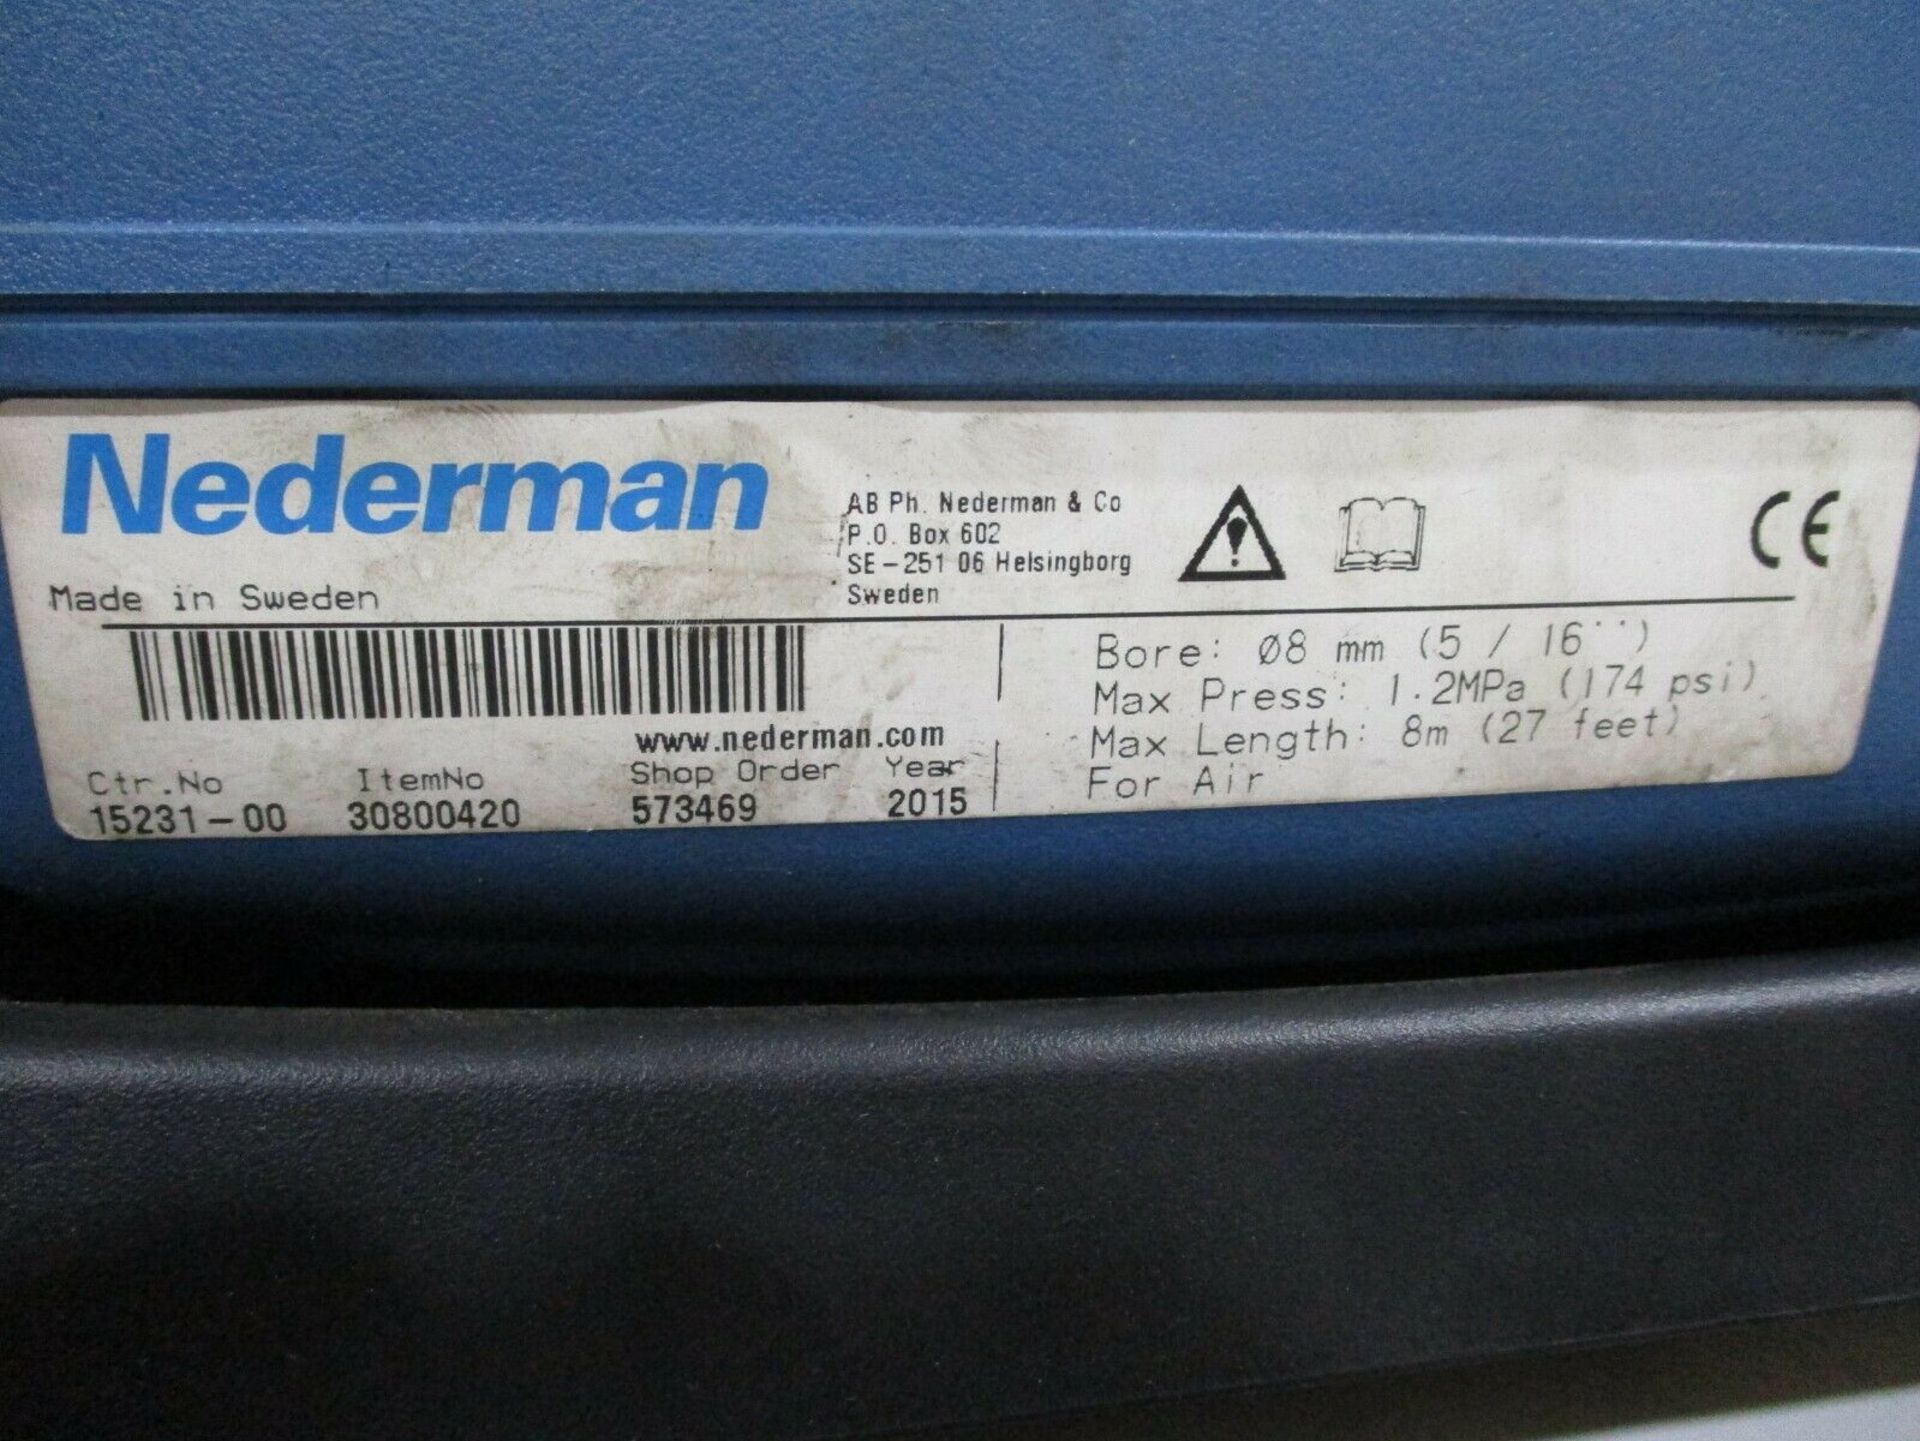 Nederman H20 Air Hose & Cable Reel - 8mm Hose, 8m Long - Image 2 of 2